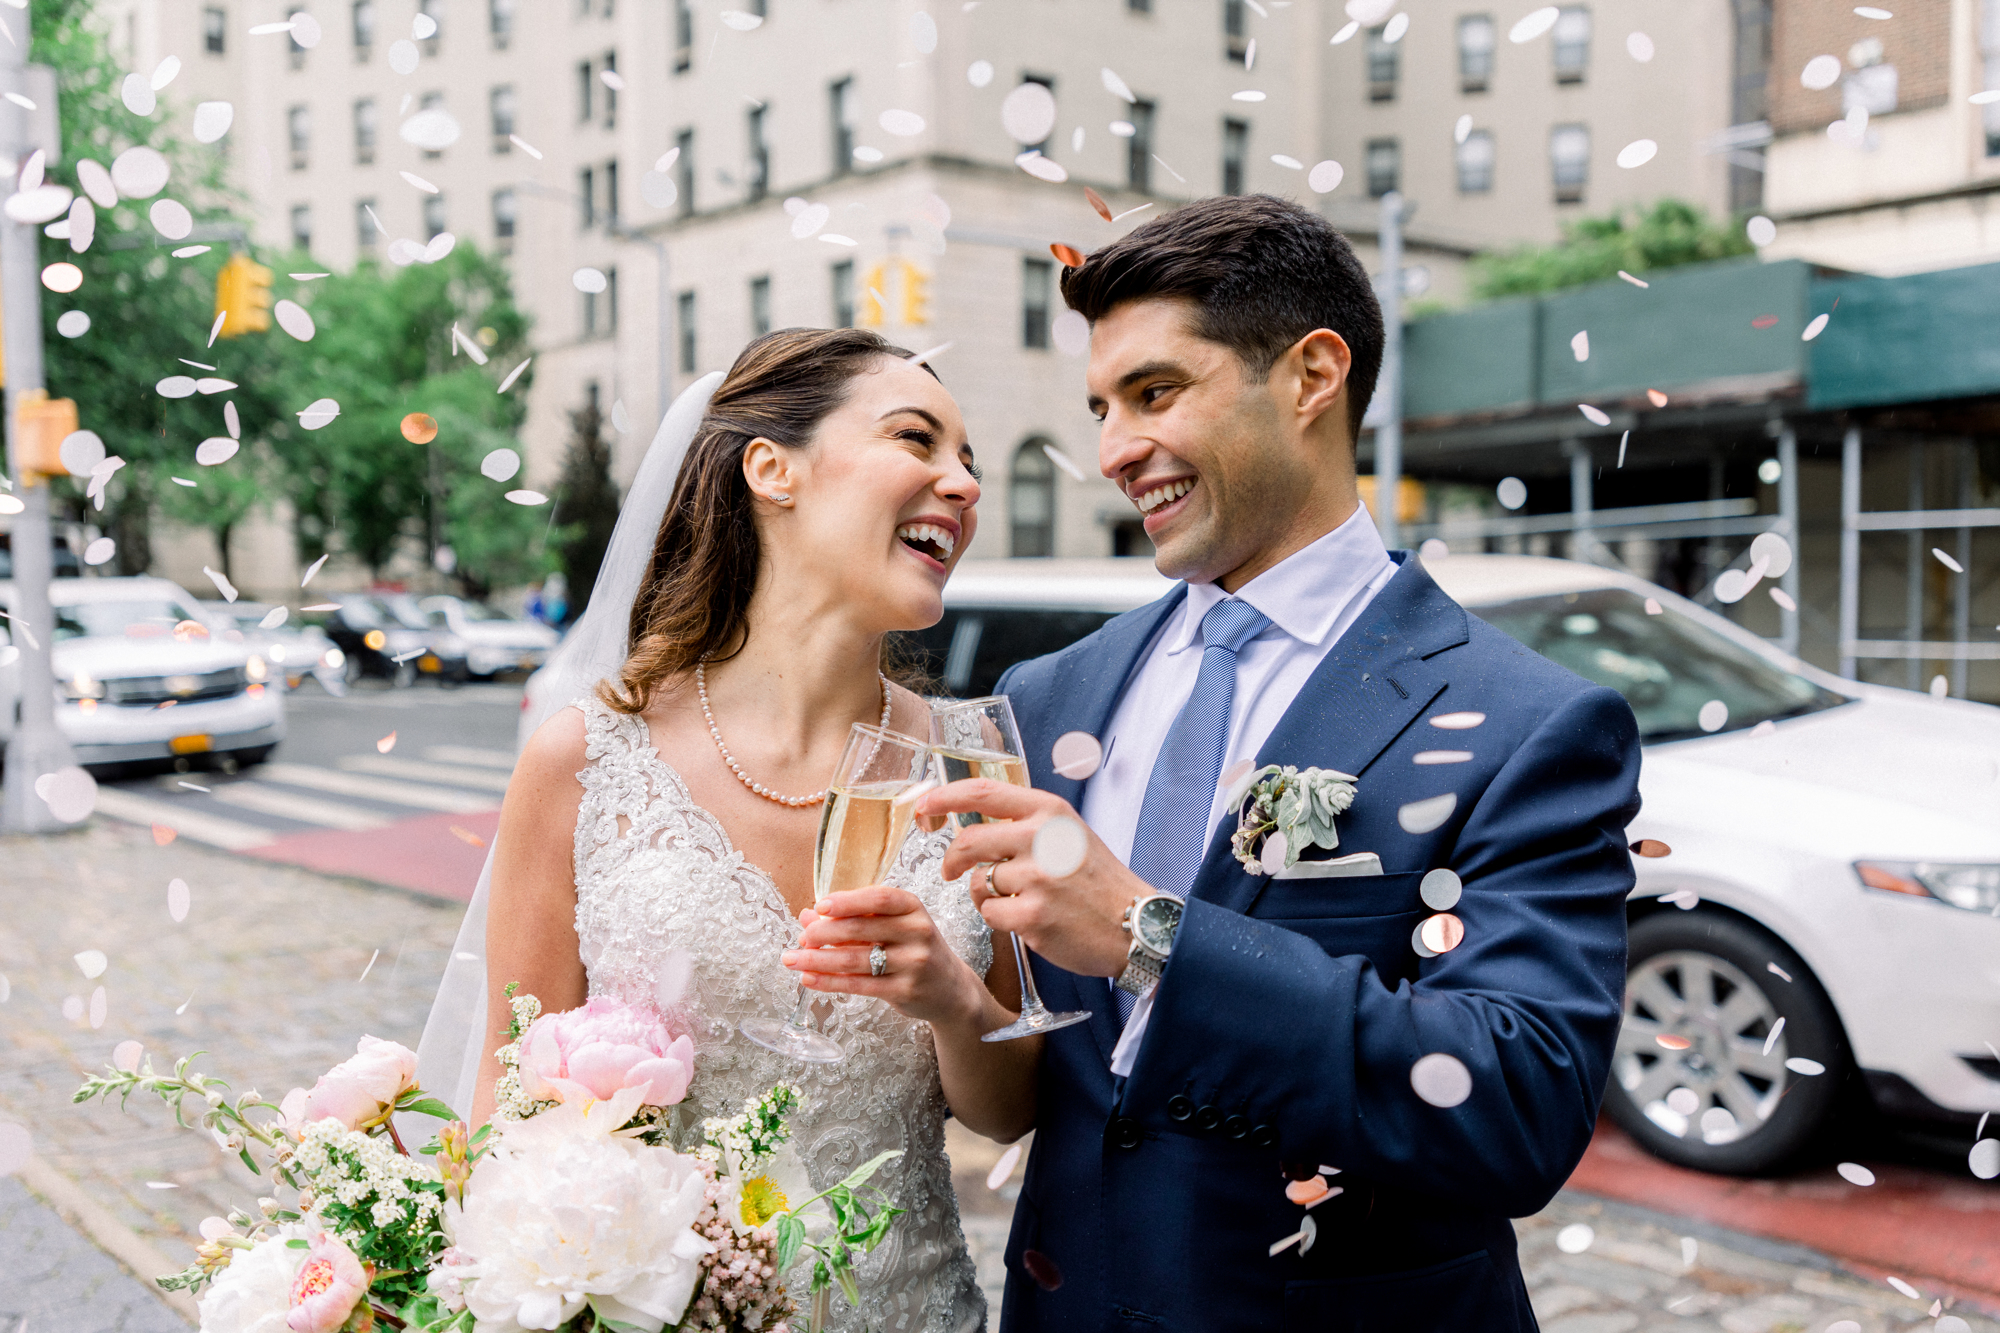 Iconic New York Wedding Photos in Conservatory Garden